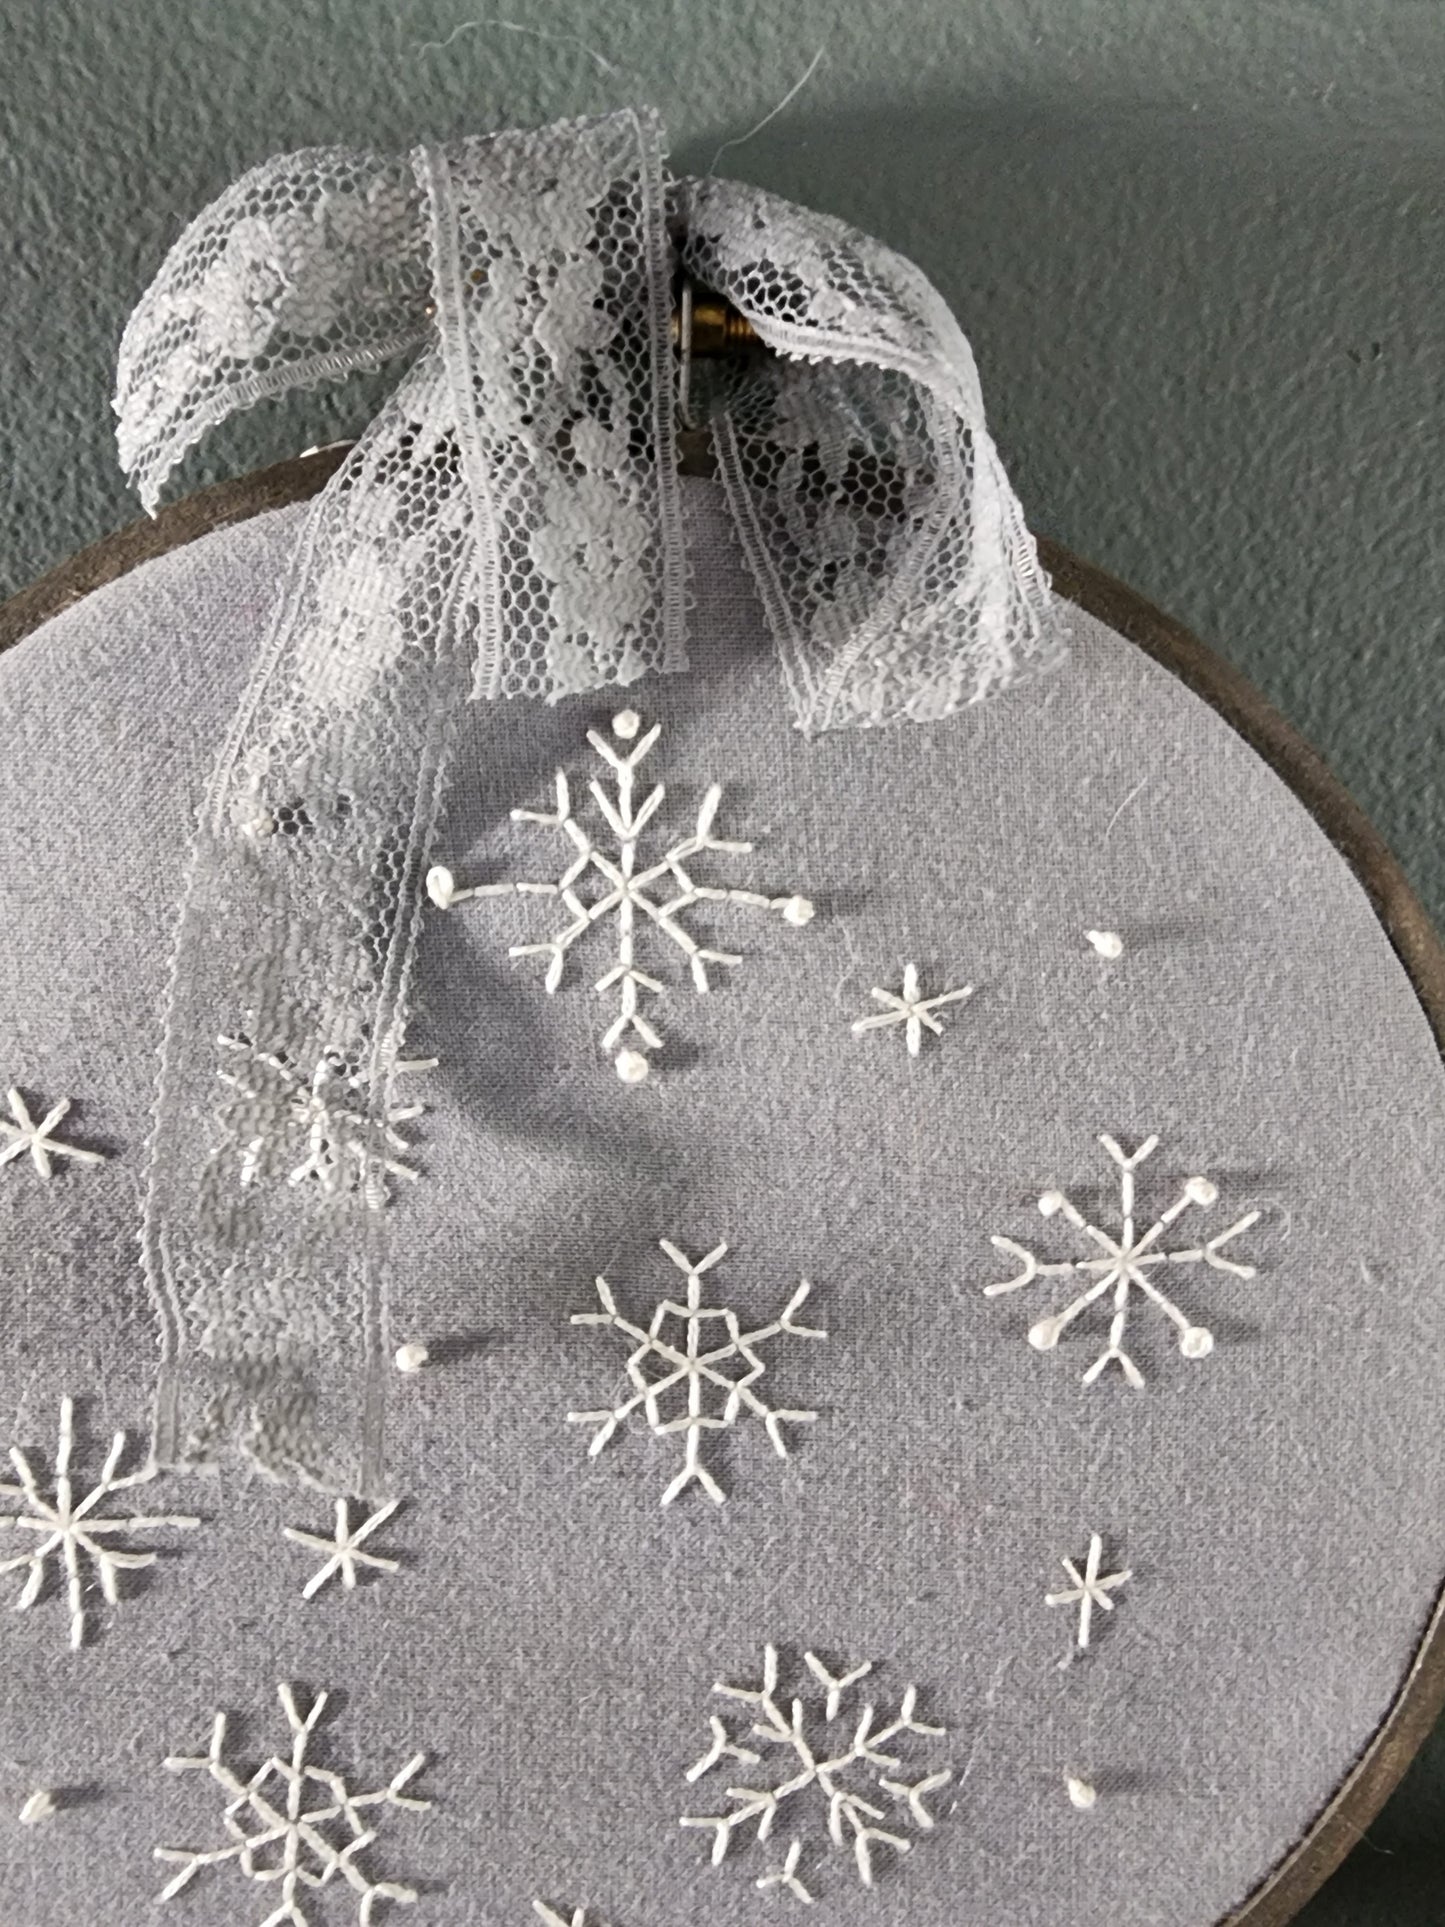 Winter Wonder Hand Embroidered Snowflakes Hoop